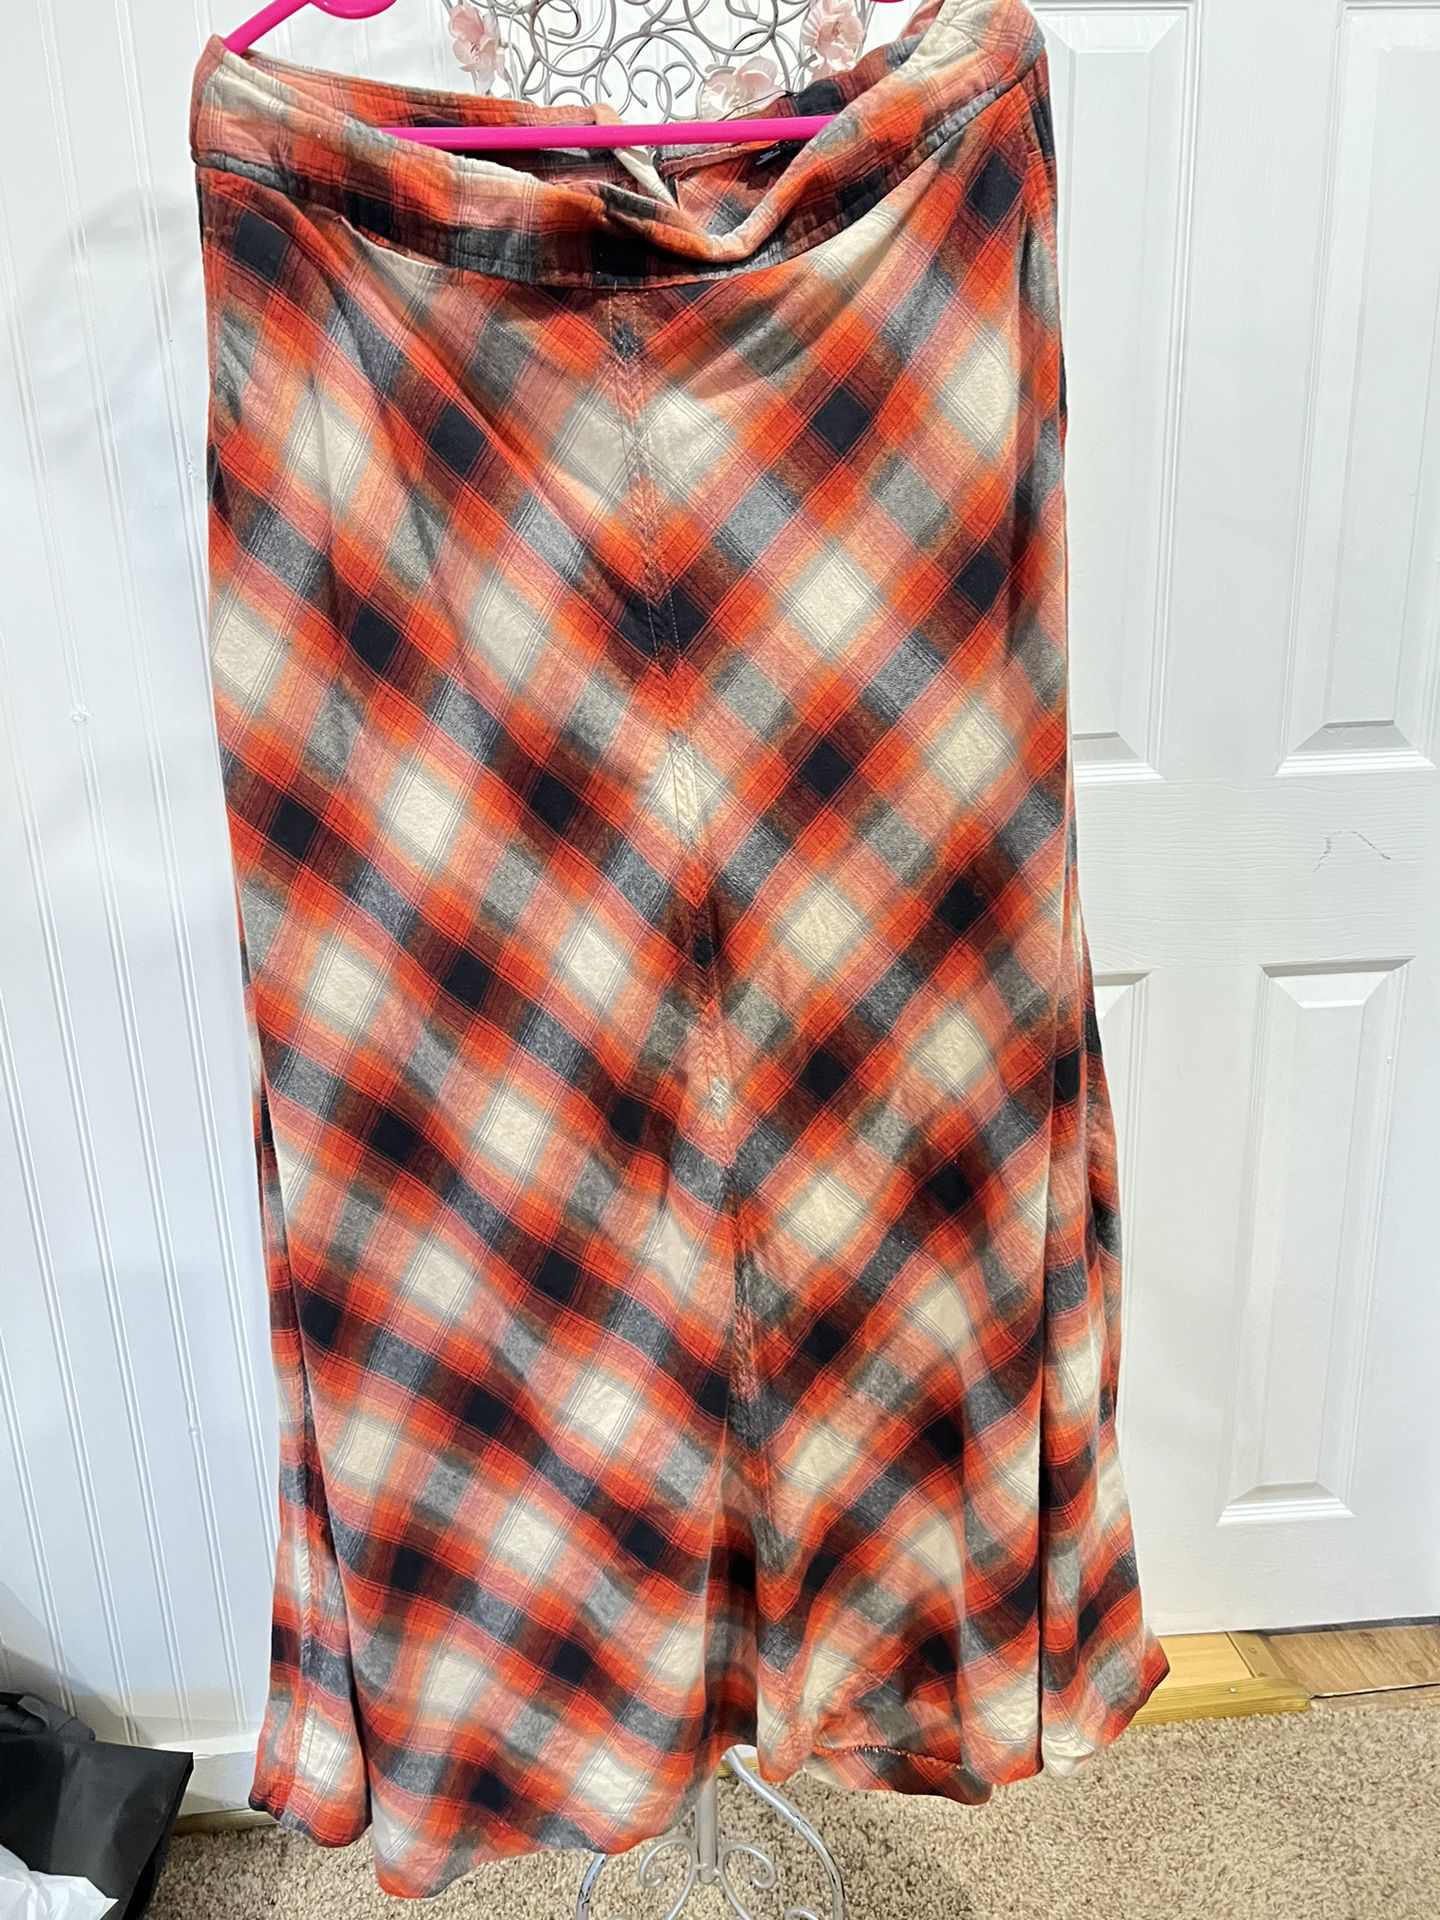  Skirt Flannel Gap size 10